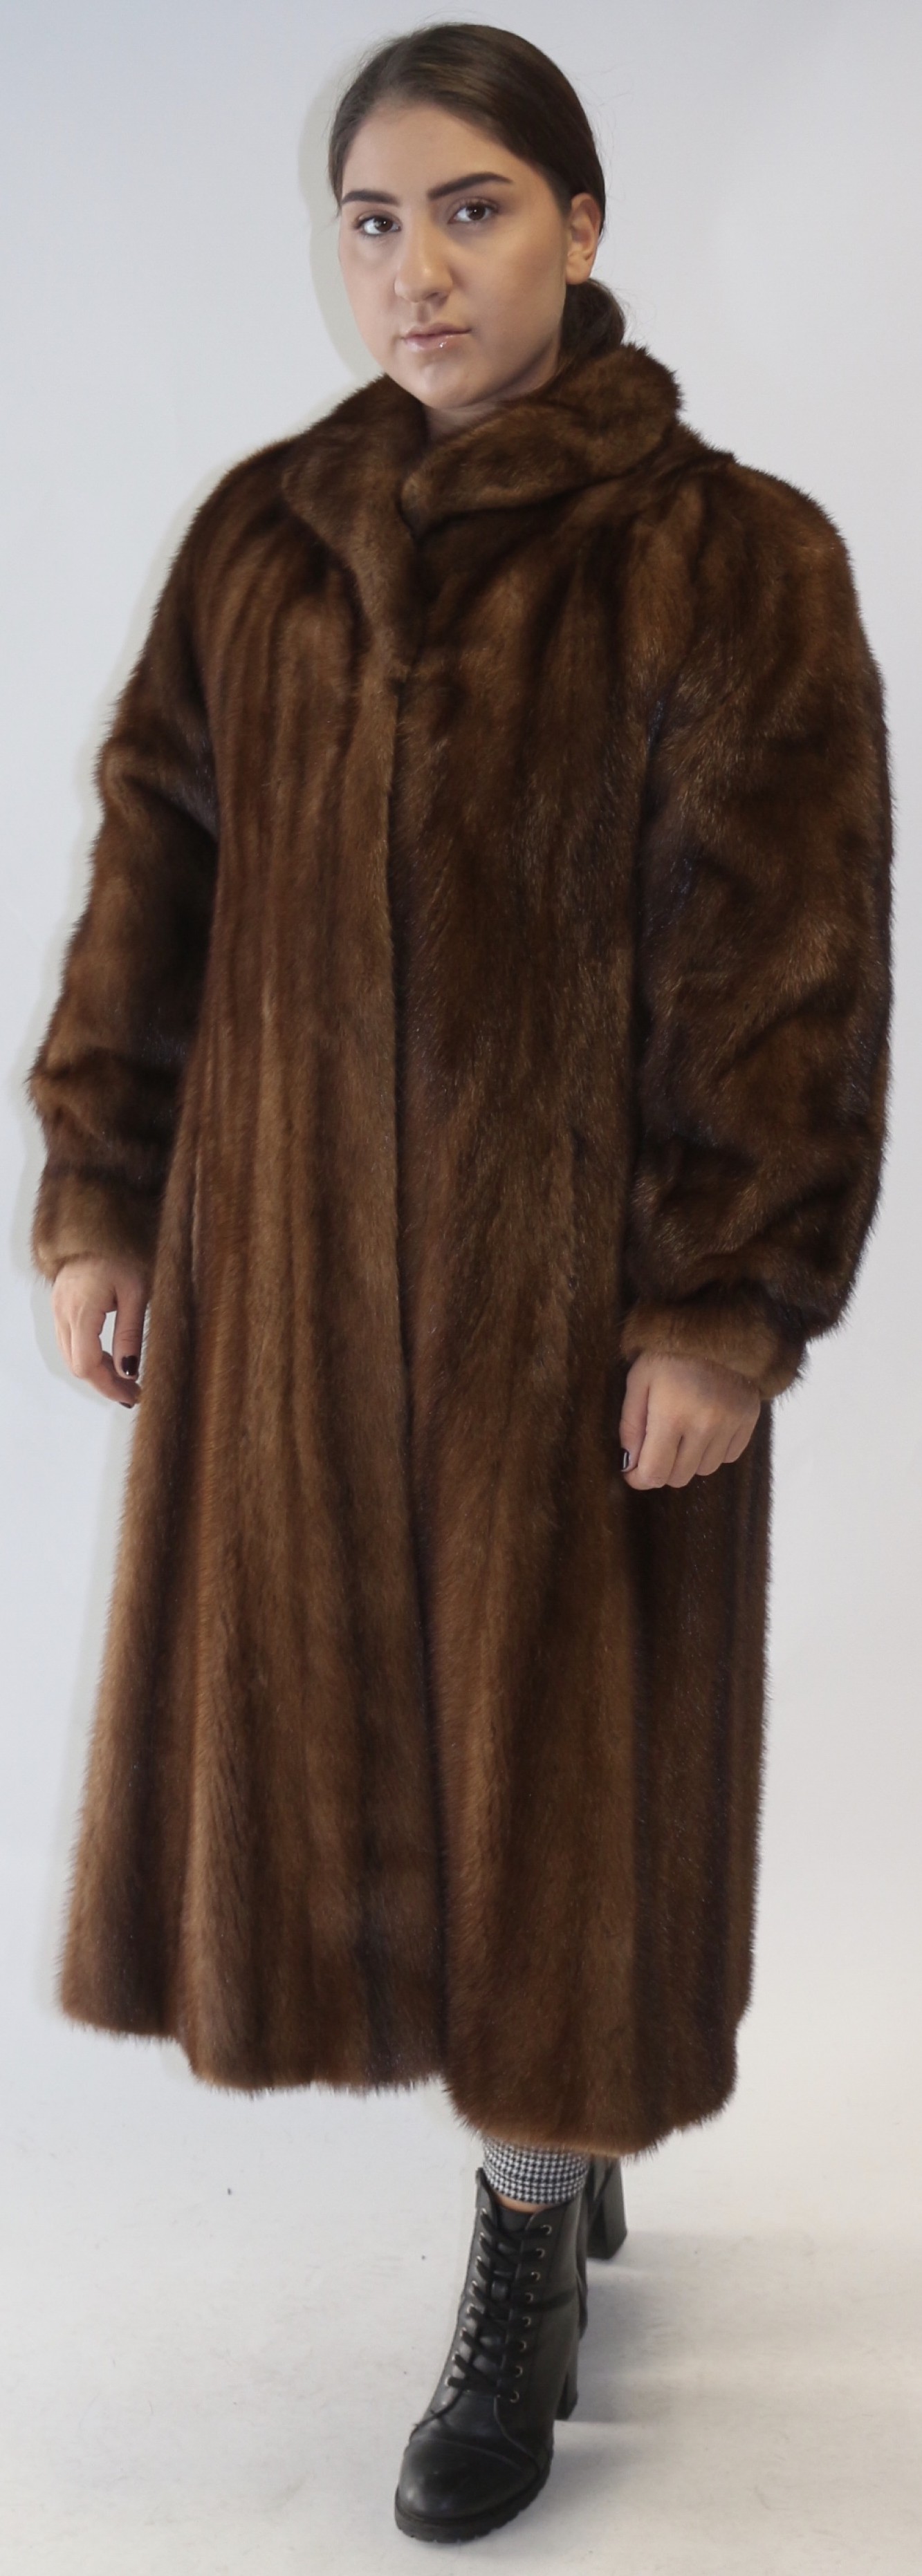 Buy Fur coat mink beige hilarious online at Your Furs Online Shop